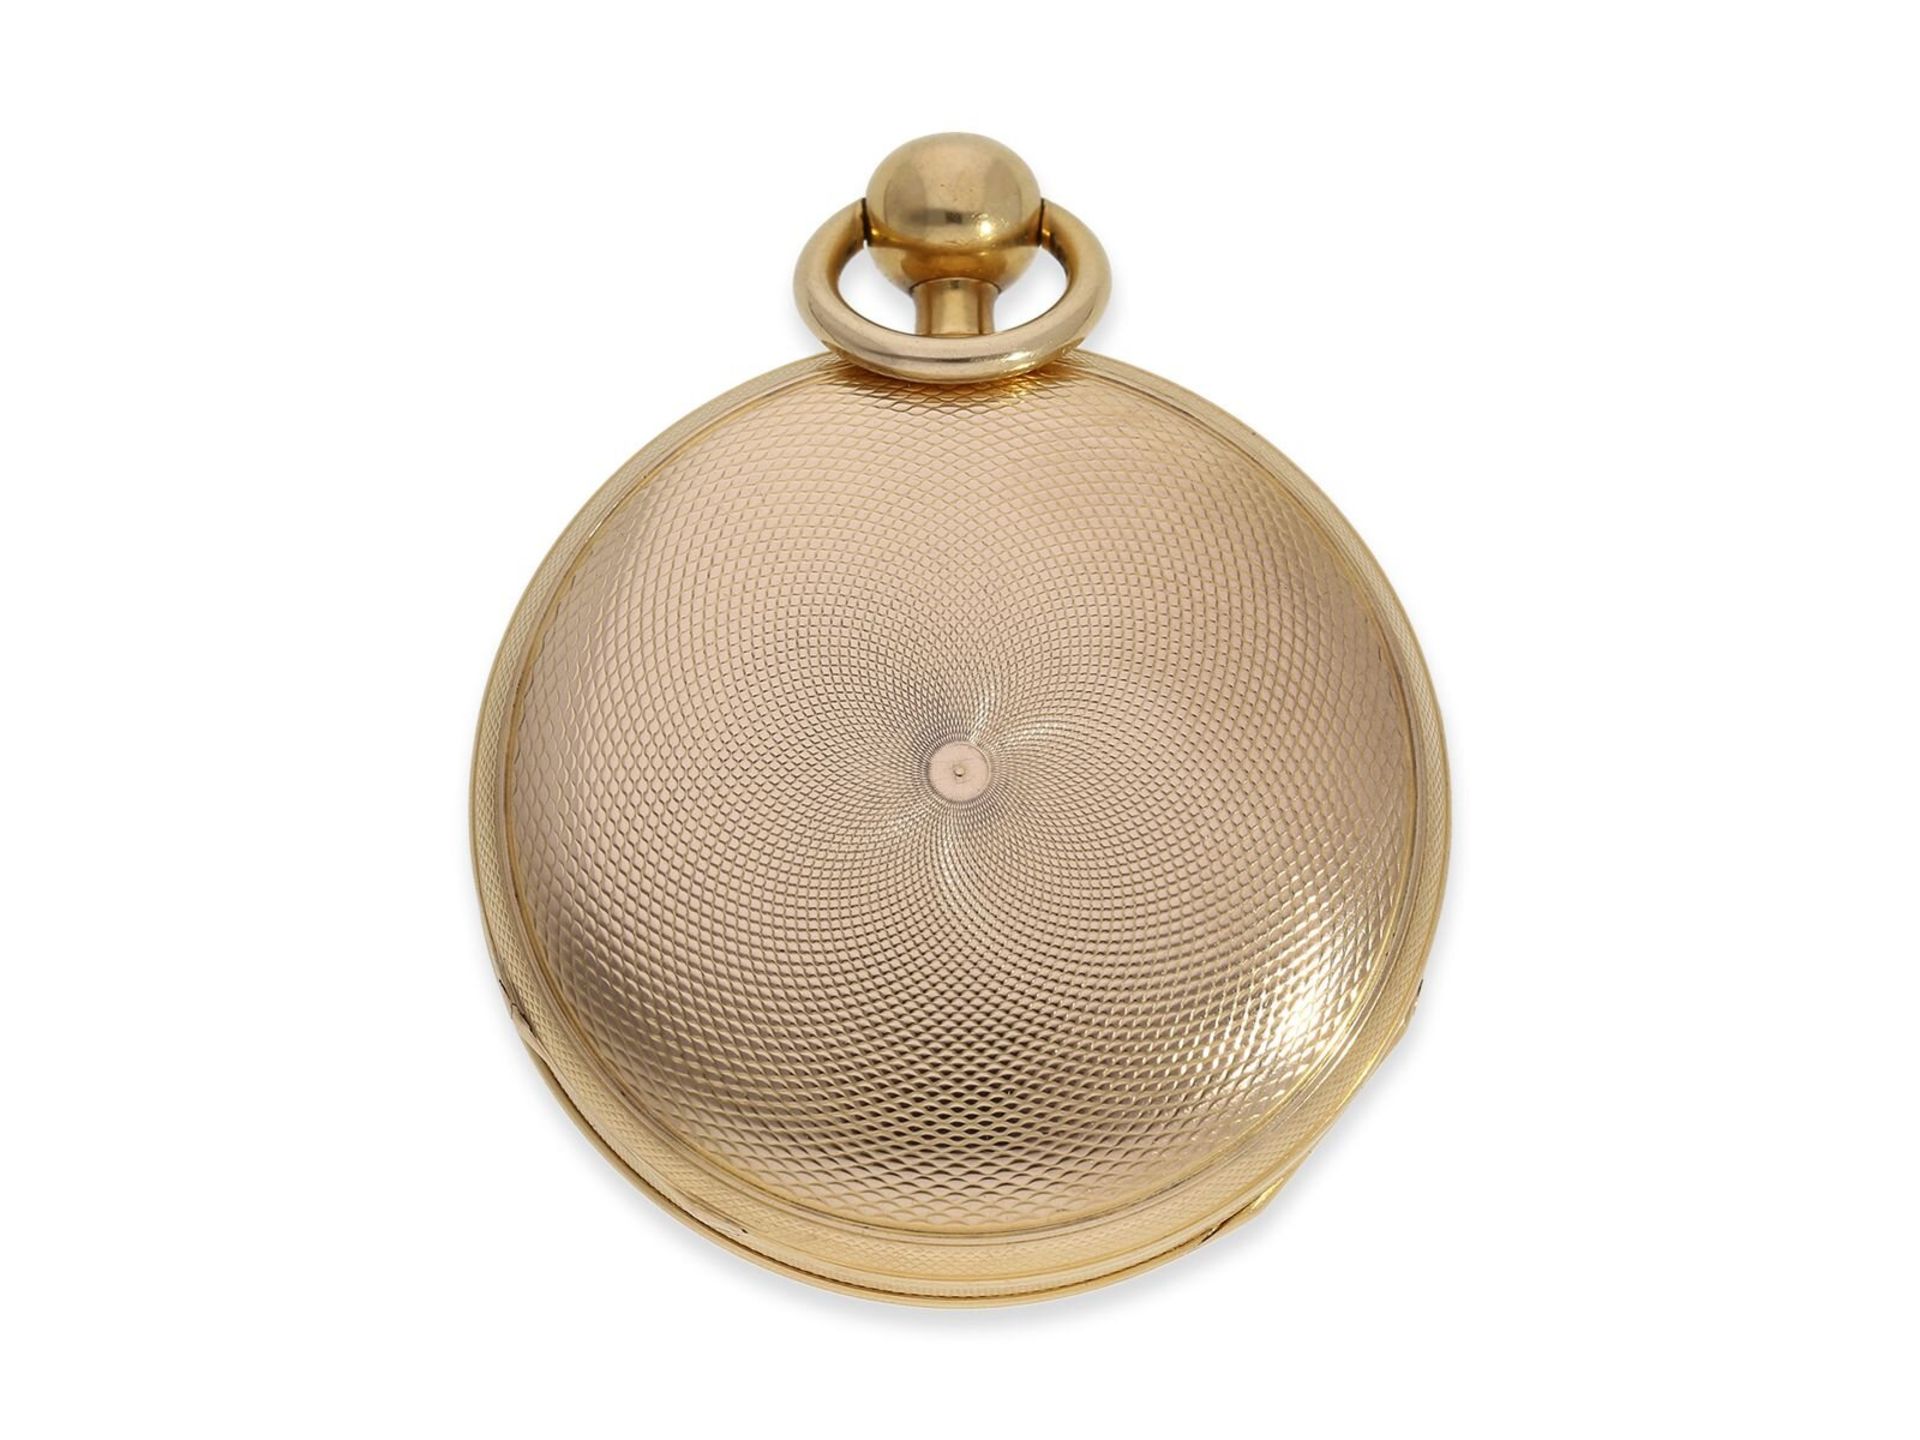 Taschenuhr: goldene Spindeluhr mit Repetition, Paris um 1820, Joachim Castin Paris No. 201 - Bild 2 aus 10